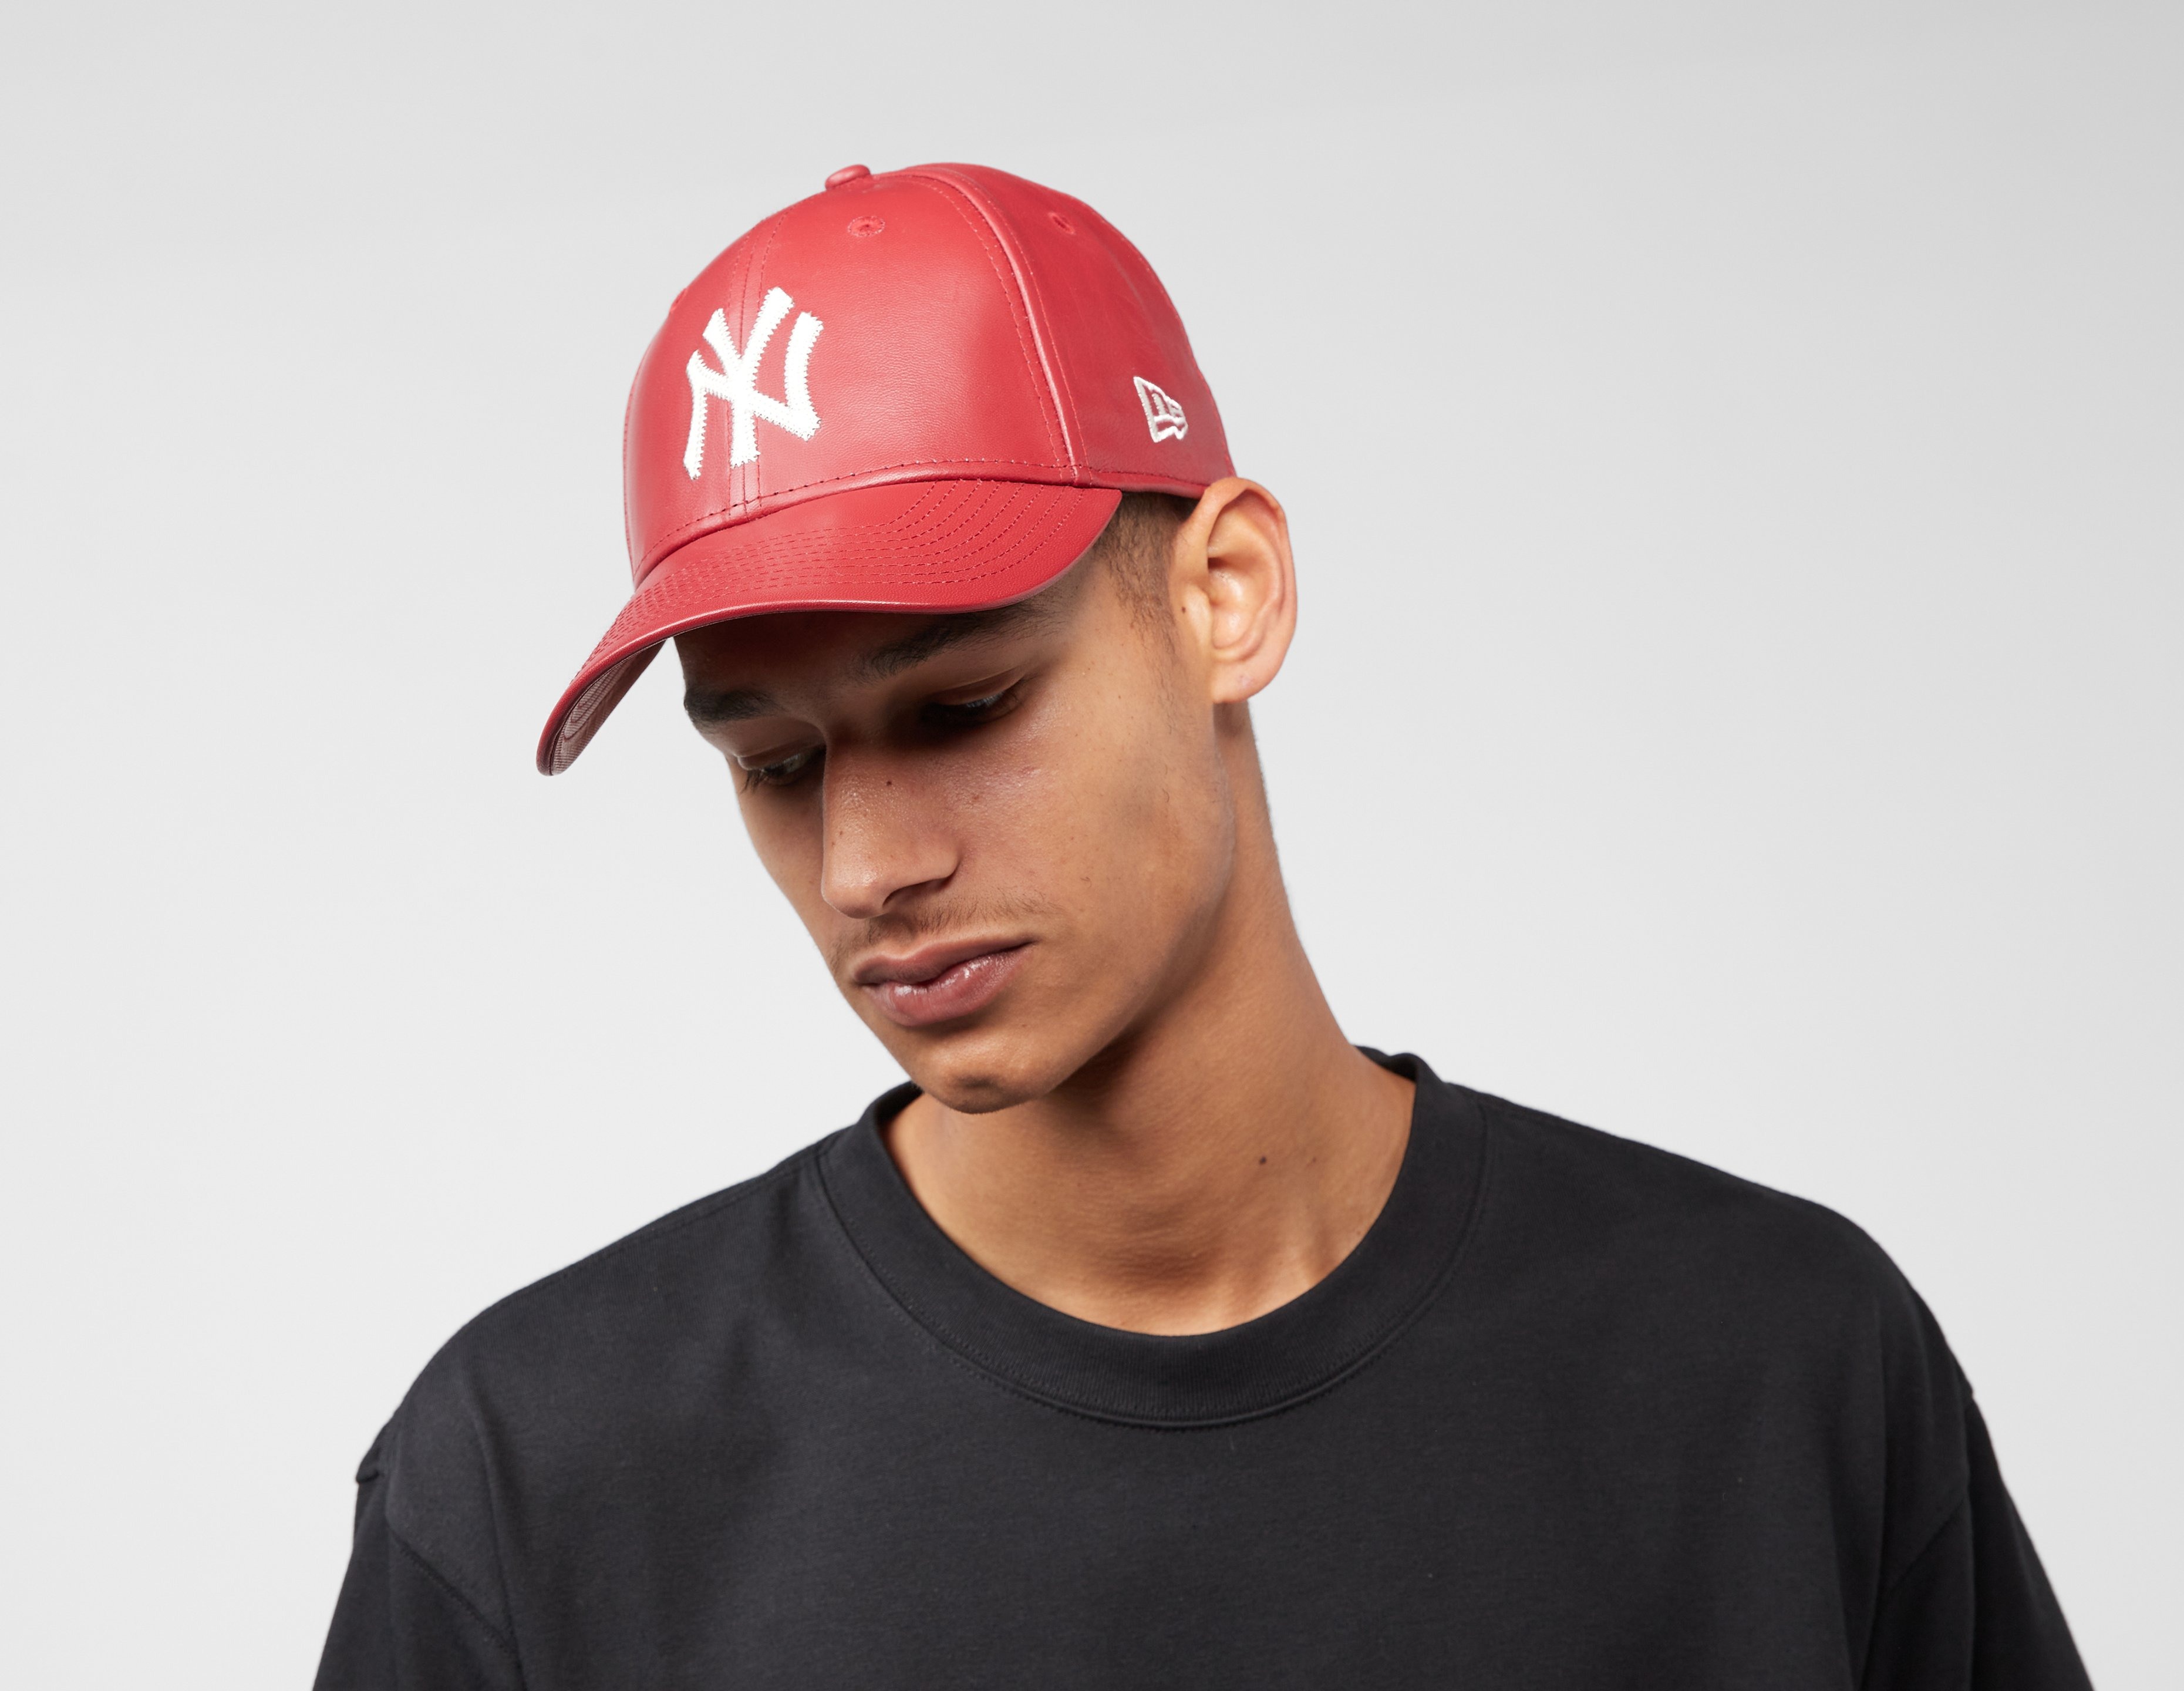 YEEZY 350 | New Zebra V2 Red Cap Healthdesign? New Leather Hats Era 2022 York Yankees MLB | 9FORTY